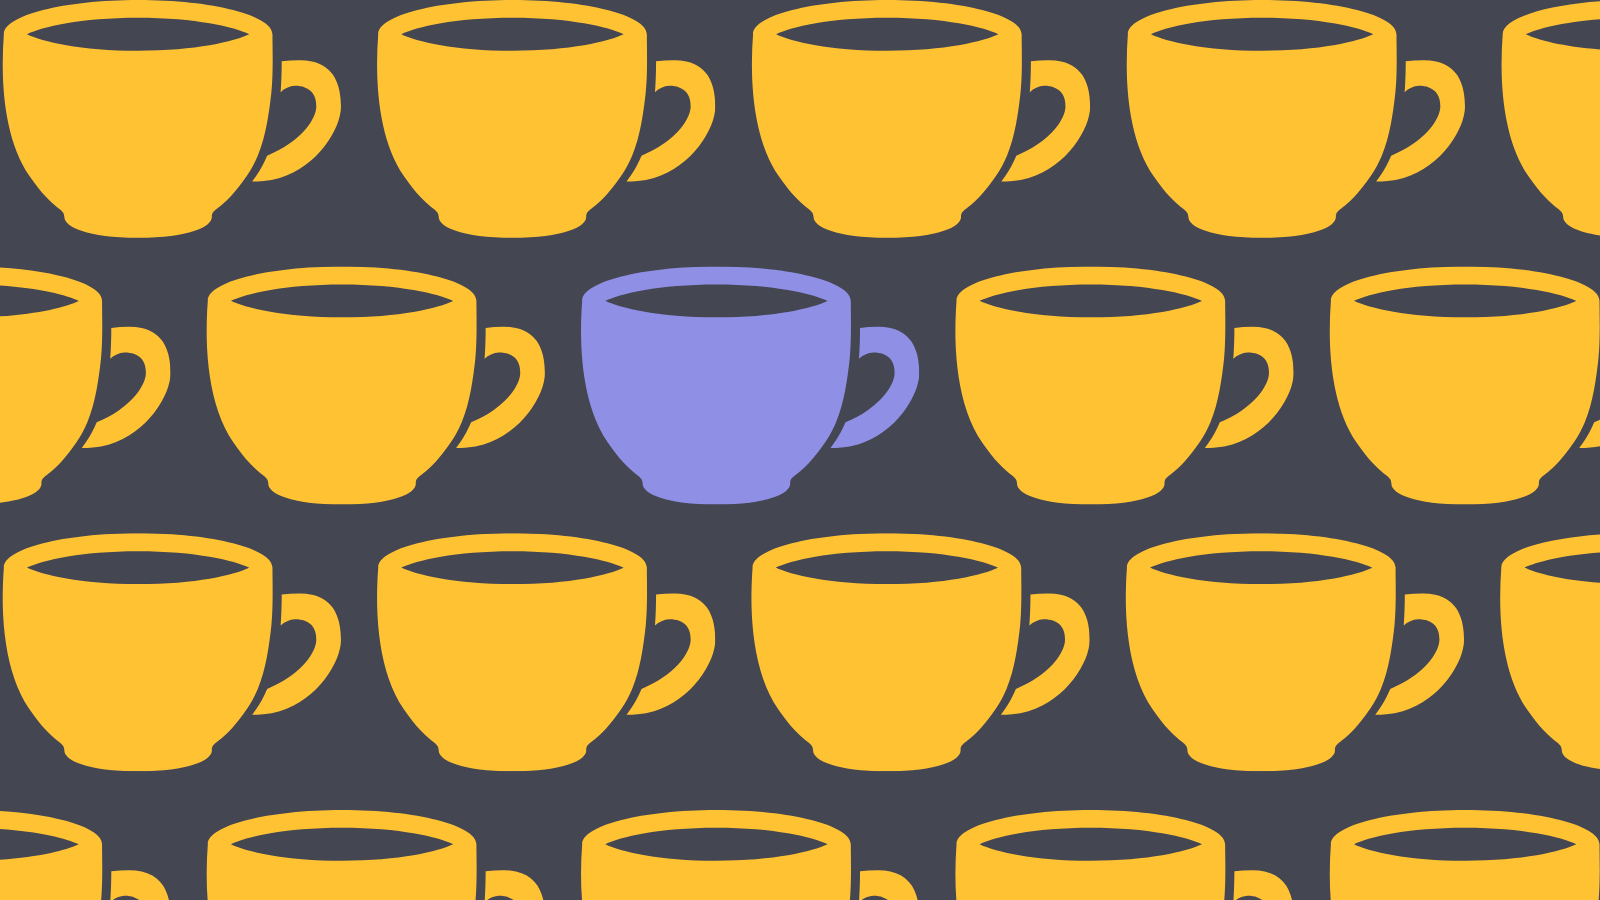 One purple mug among rows of yellow mugs